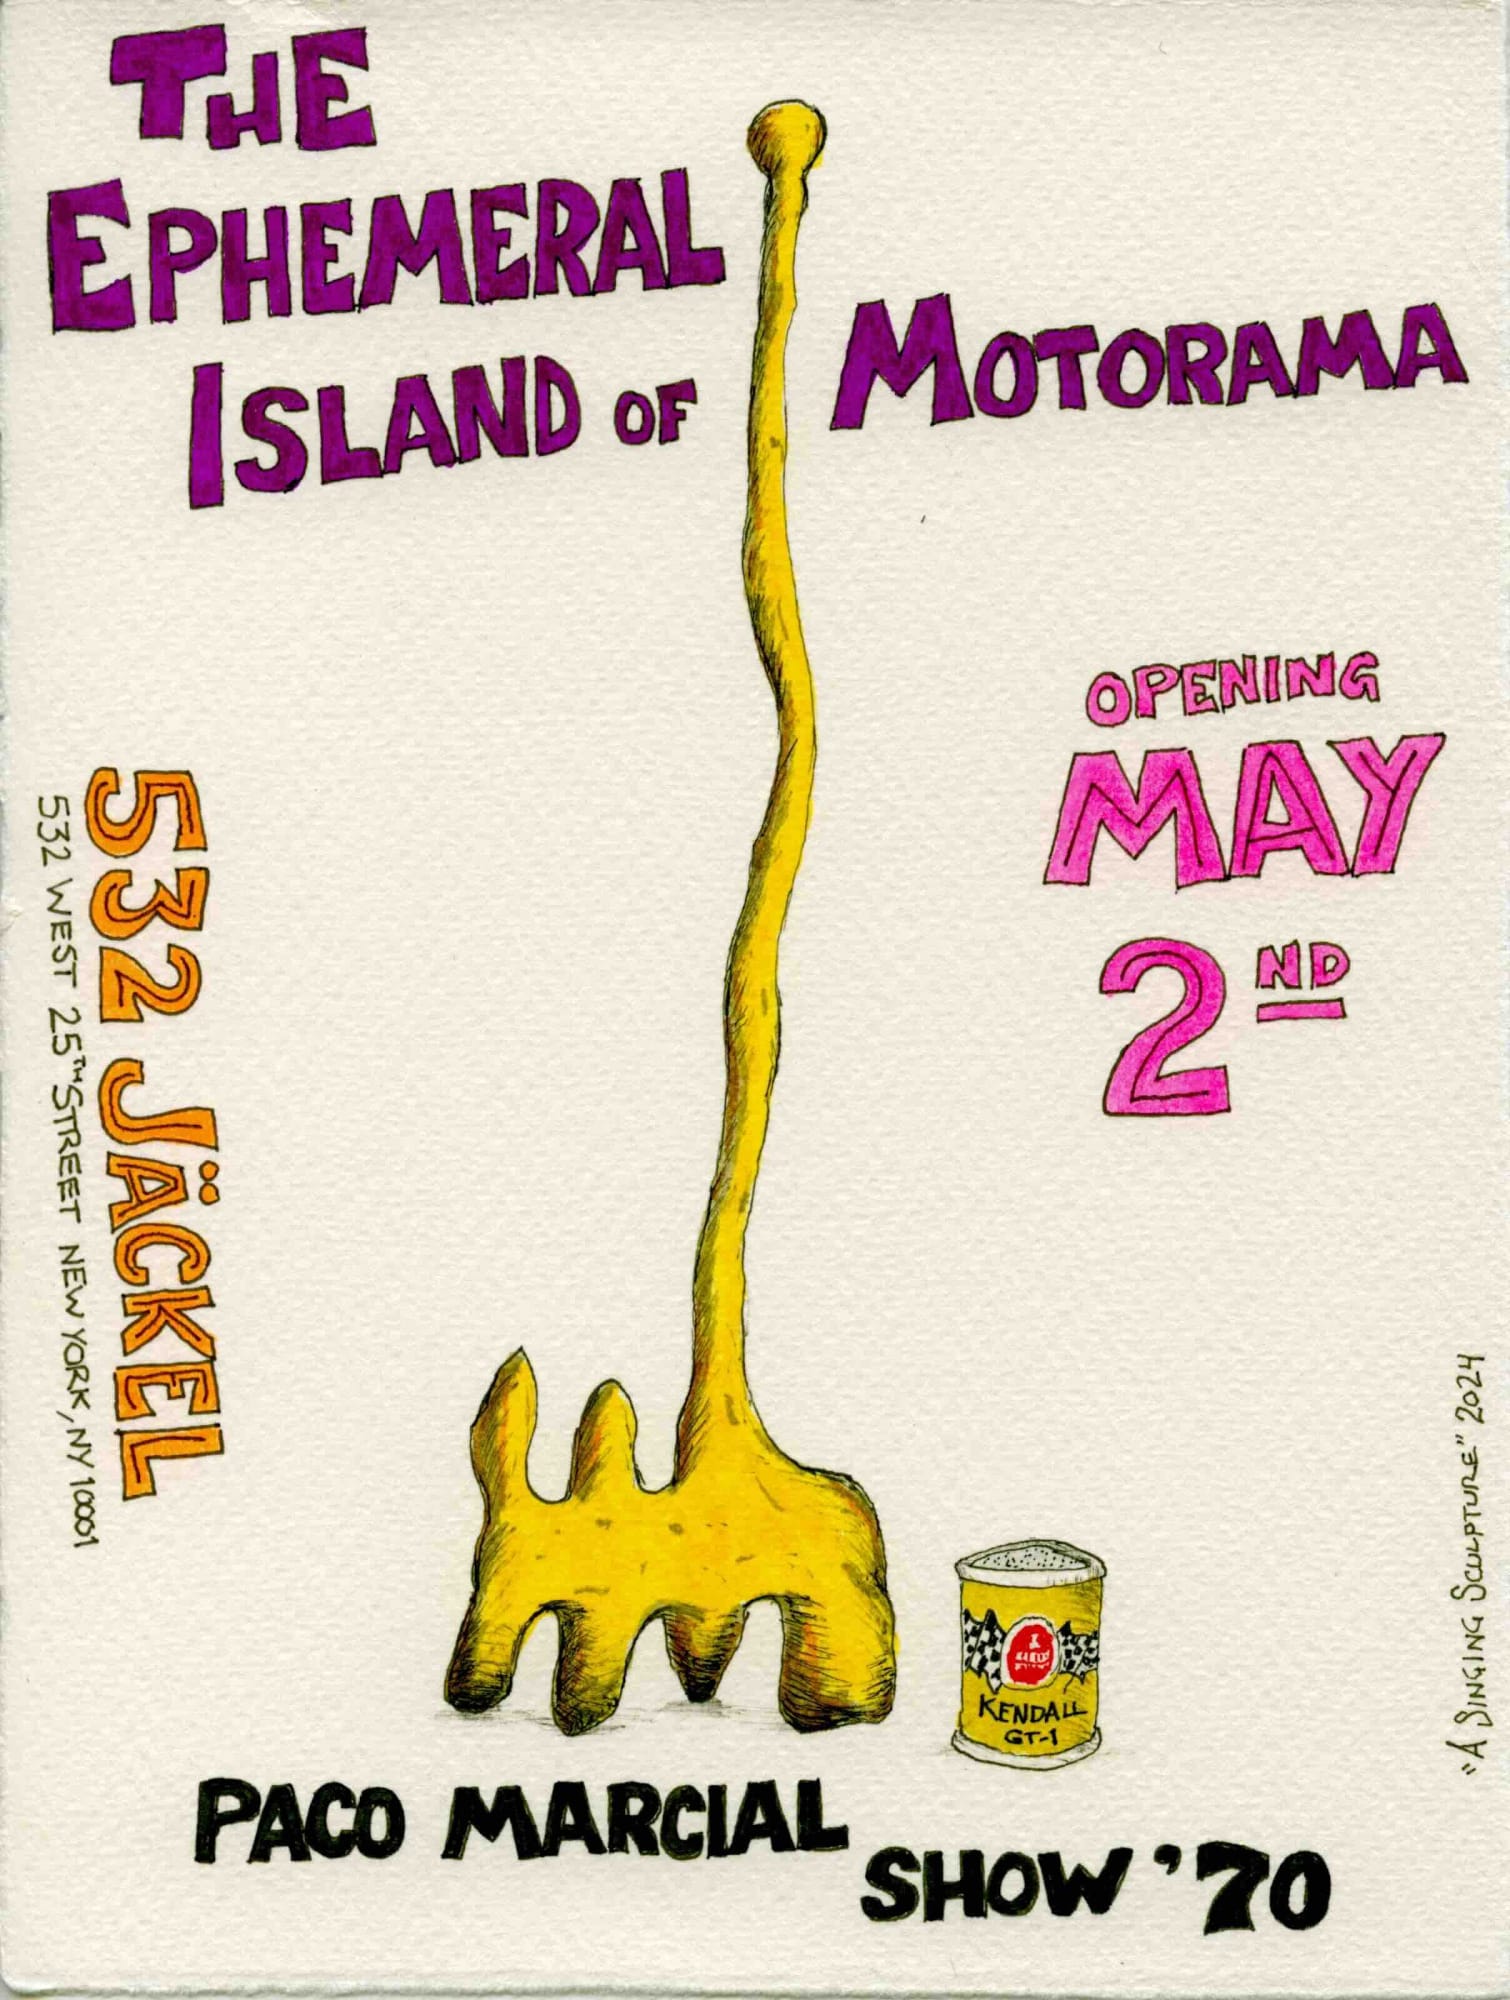 The Ephemeral Island of Motorama